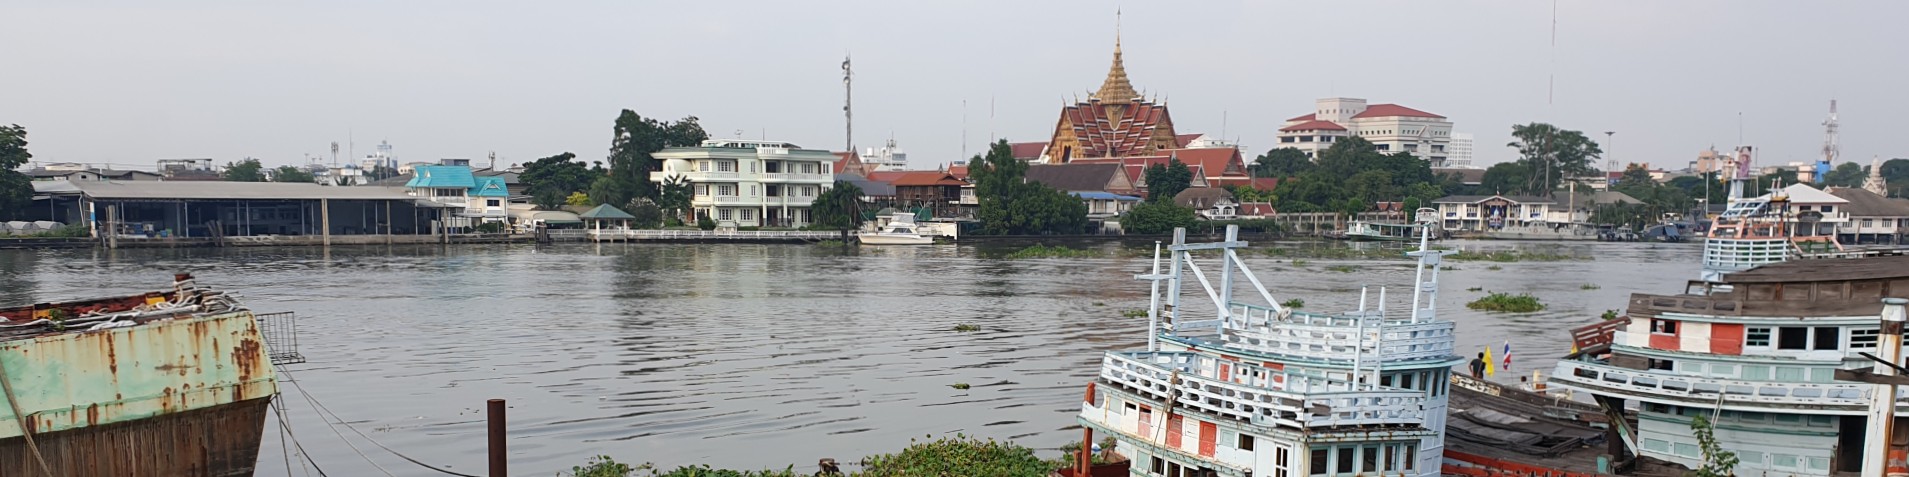 Tha Chin River in Samut Sakhon